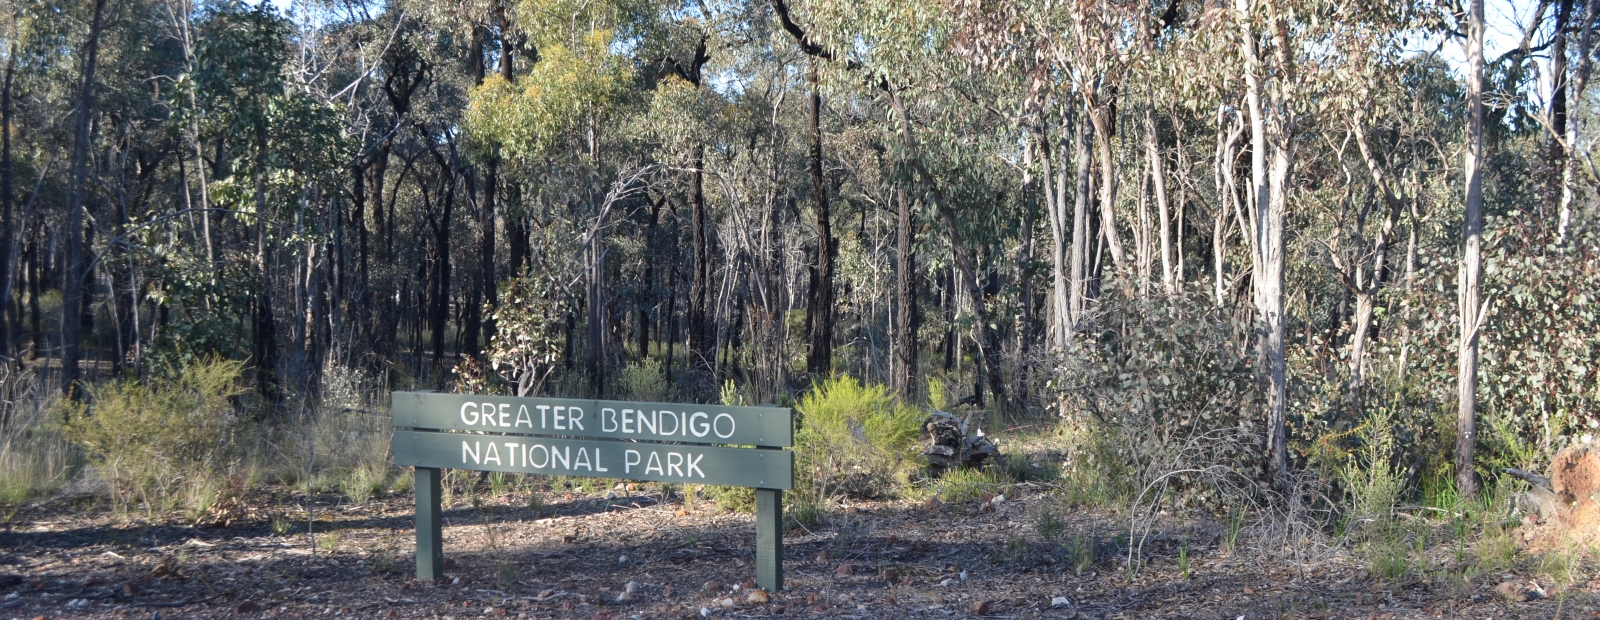 Community input session – Greater Bendigo Public Space Plan and Greening Greater Bendigo Strategy